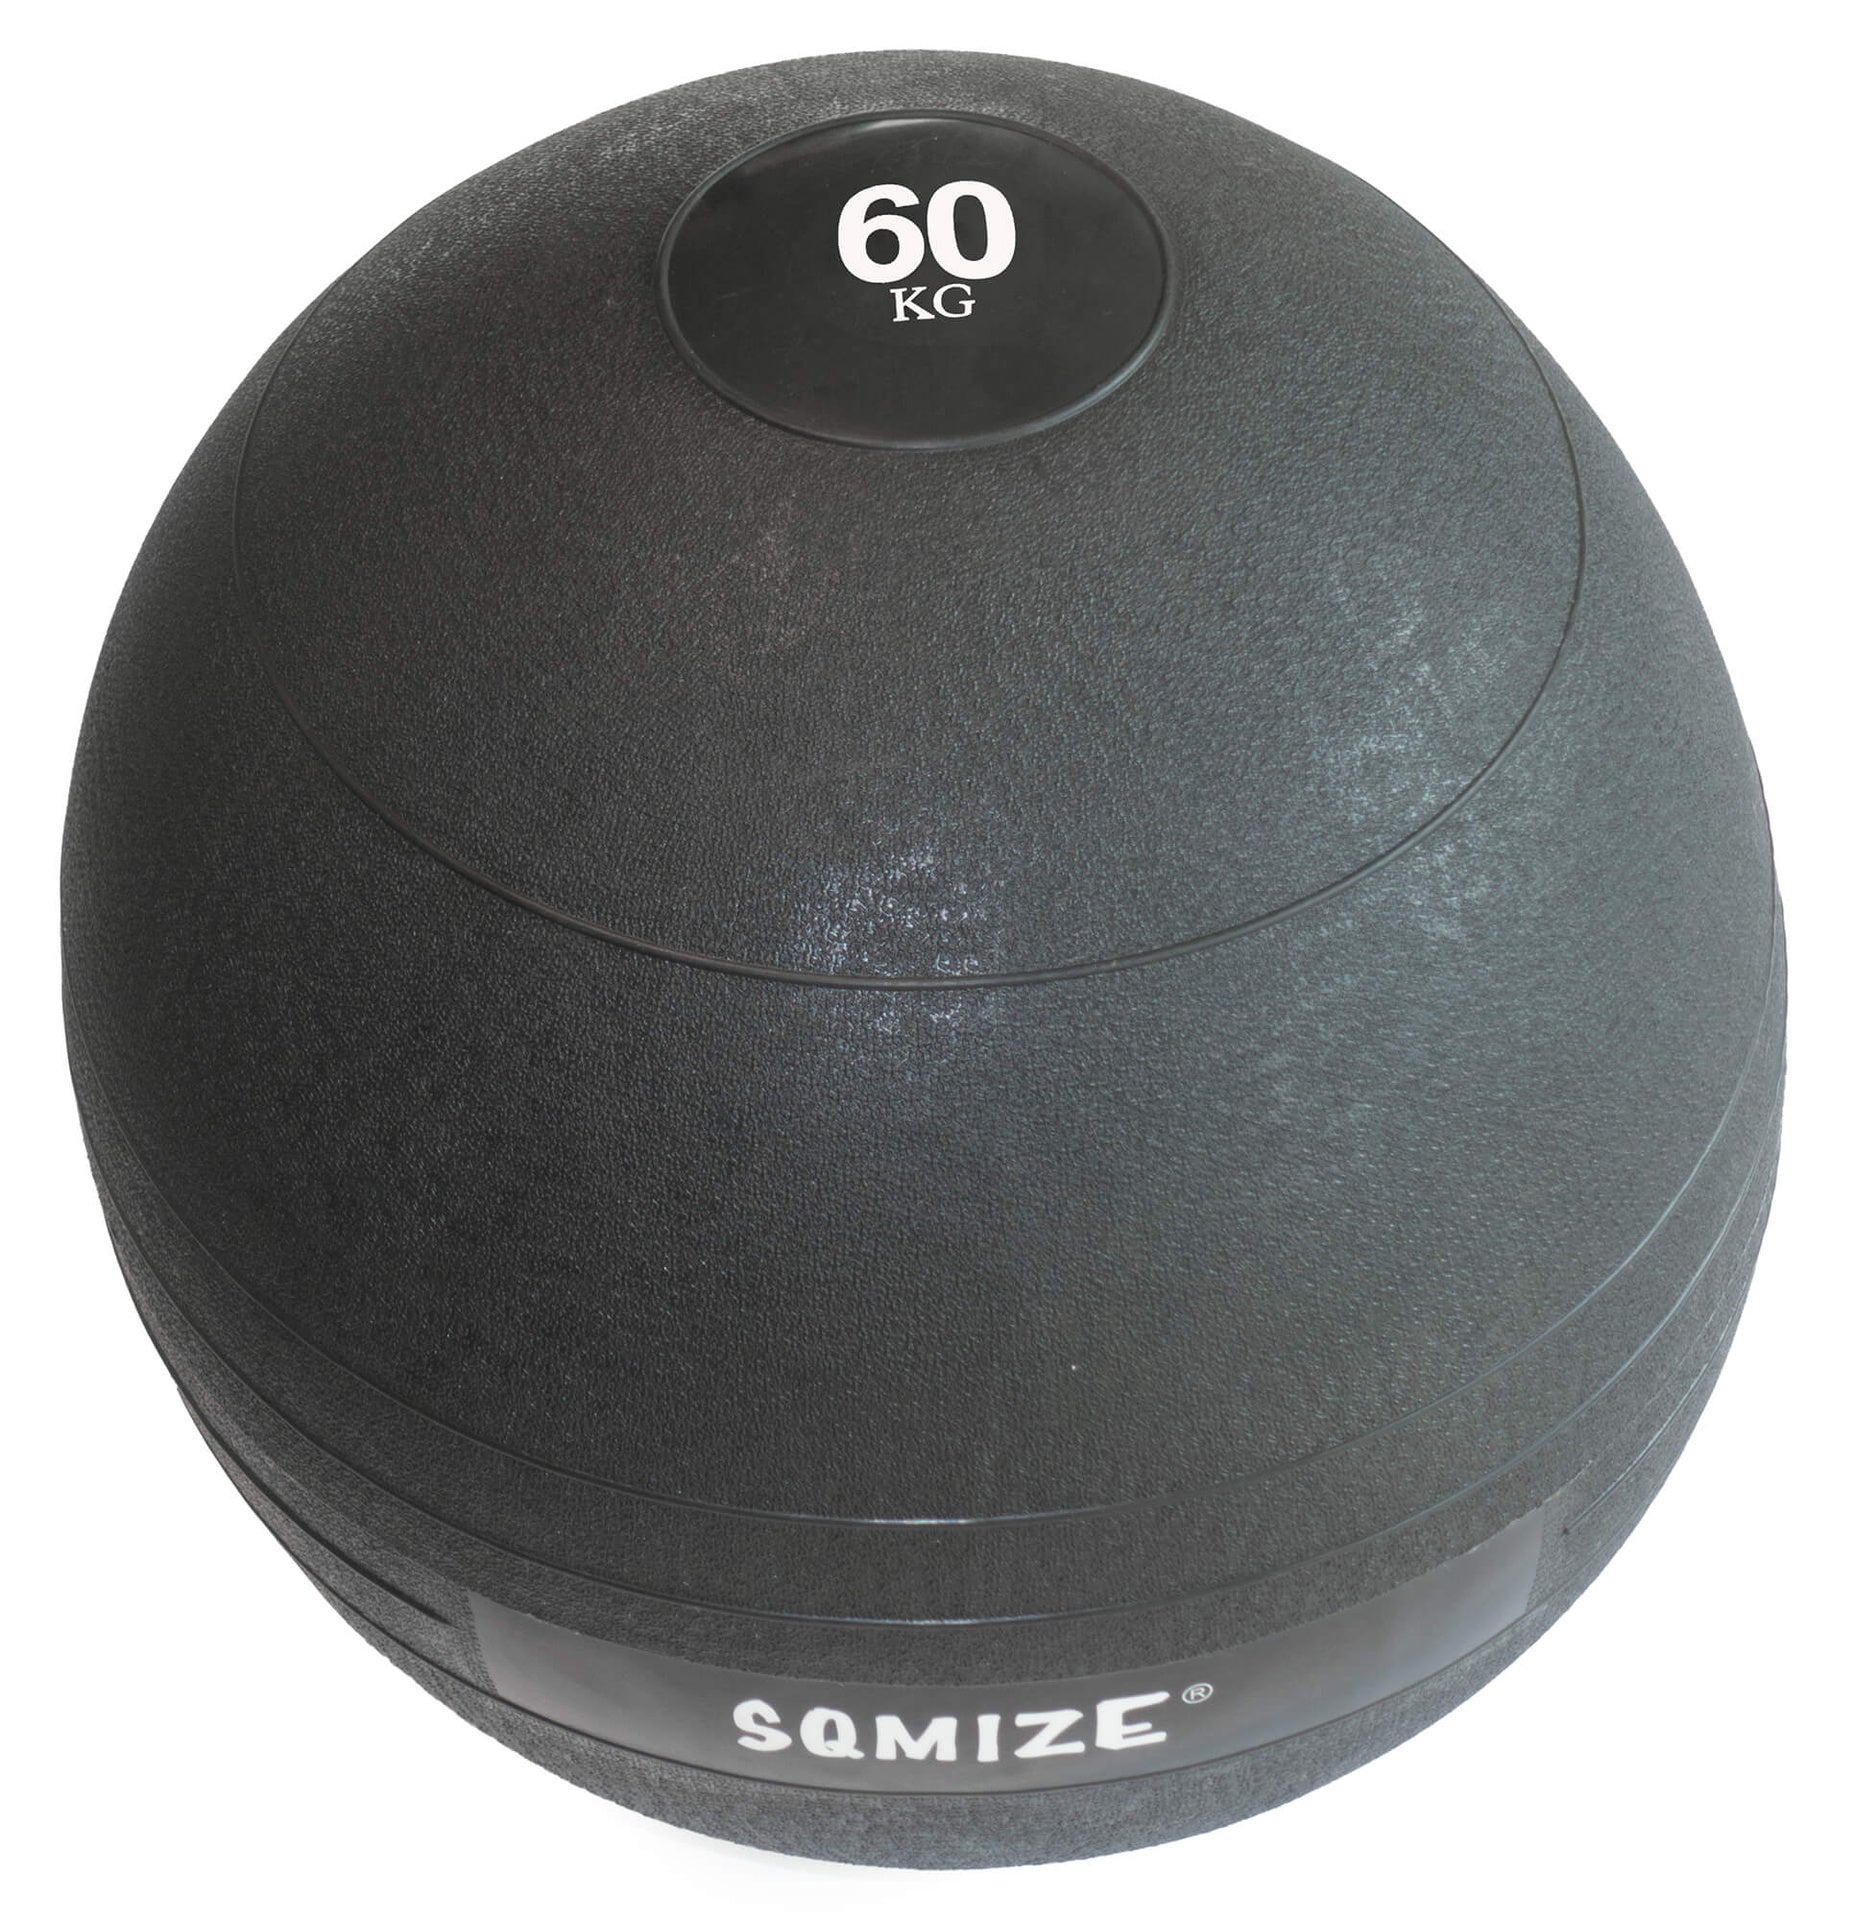 Slam Ball SQMIZE® SBQ60, 60 kg - SQMIZE Nederland